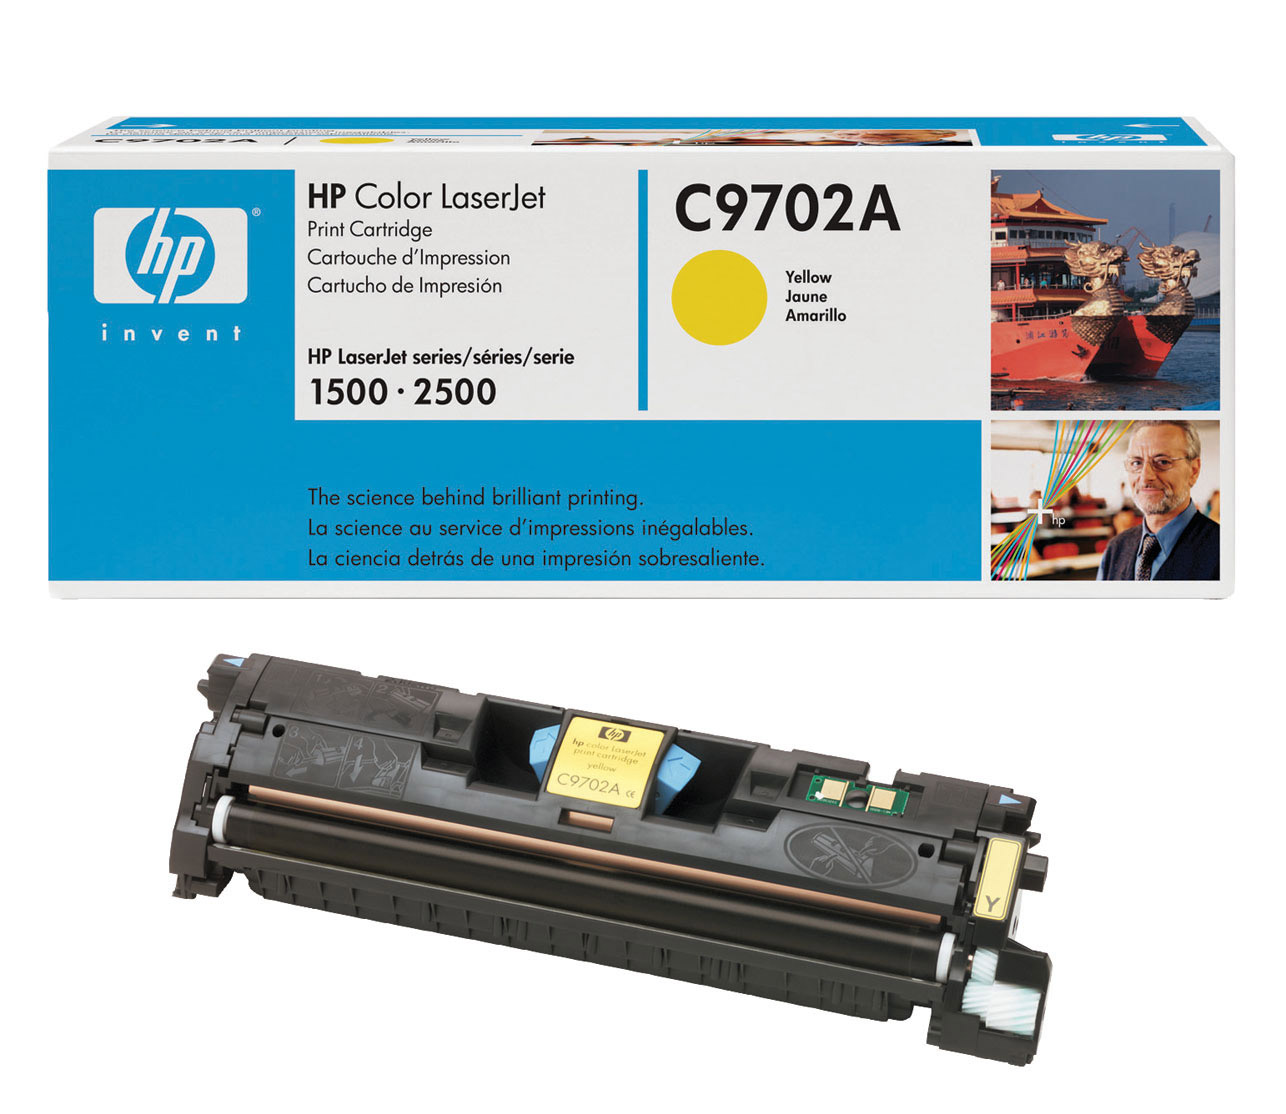 HP C9702A   Yellow printer cartridge